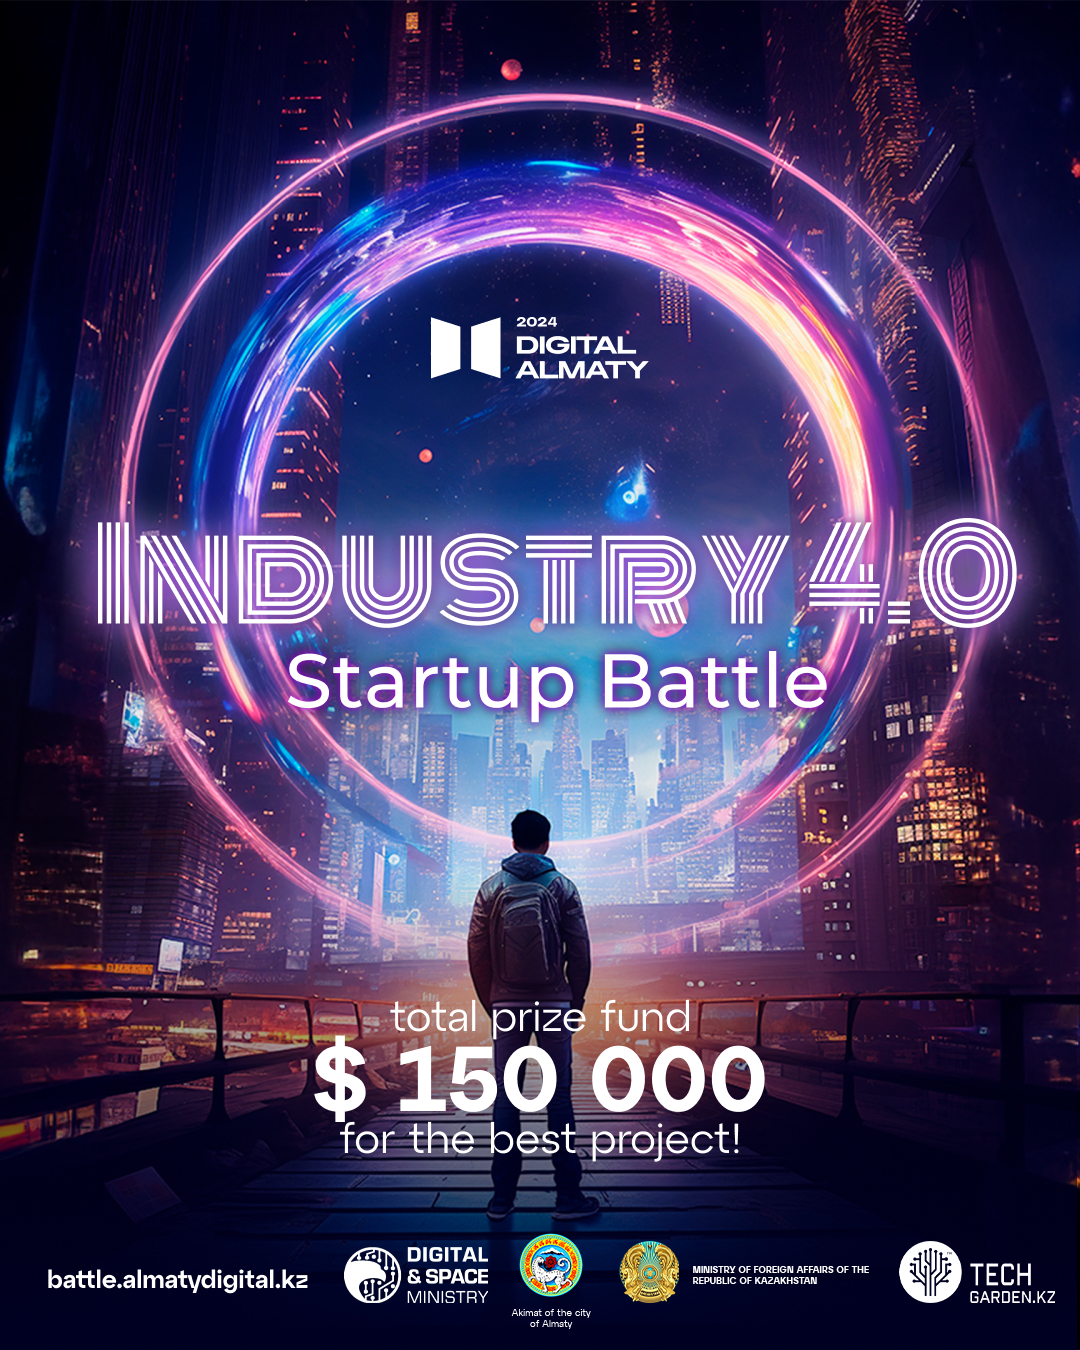 The big startup battle for 150,000 dollars